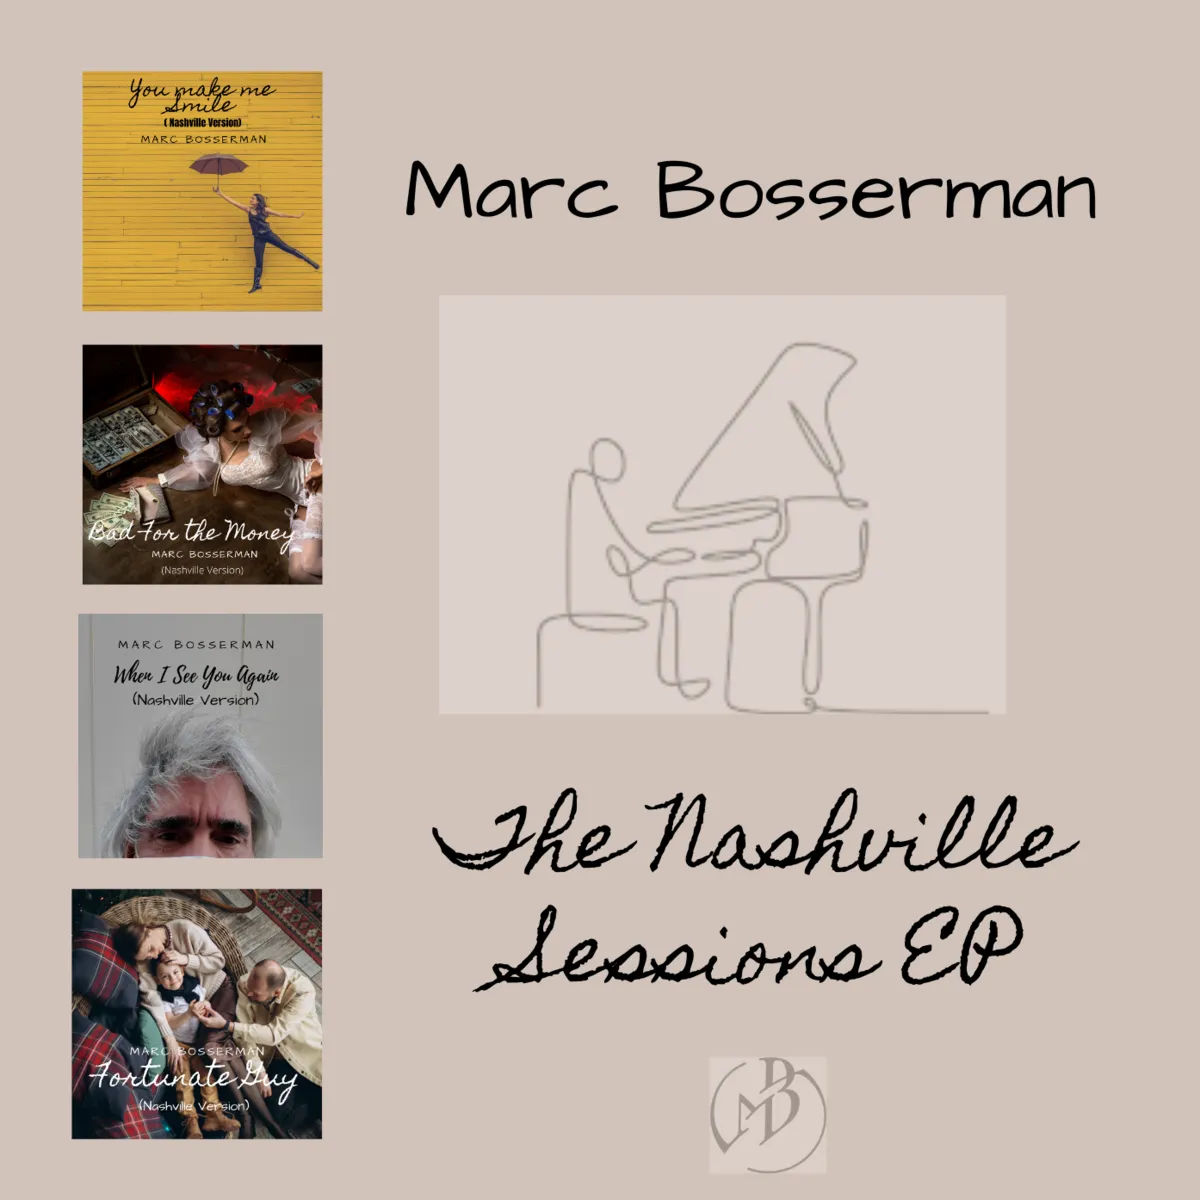 Nashville Session EP - Marc Bosserman - (digital)